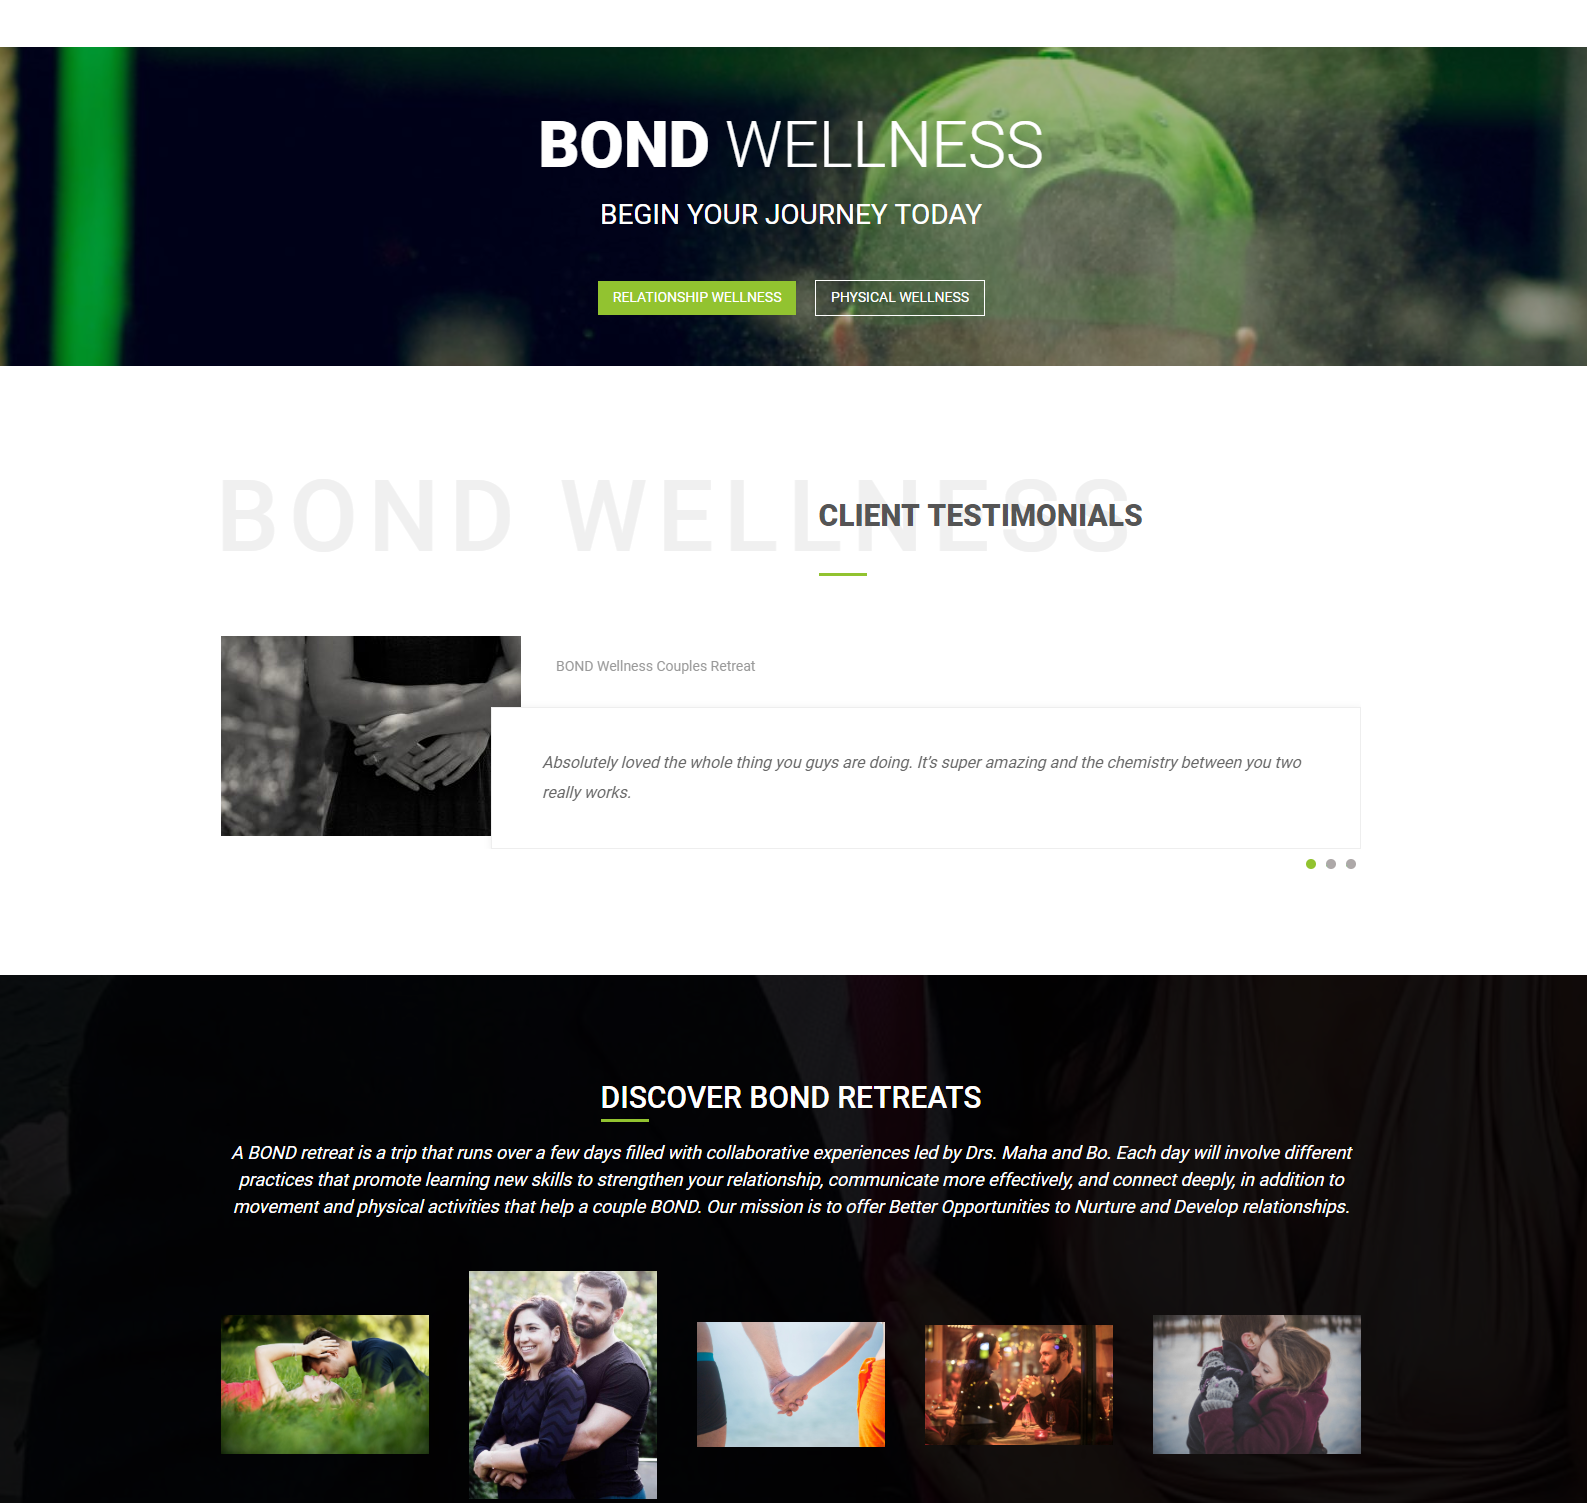 Bond Wellness Splash Page Client Testimonials Section